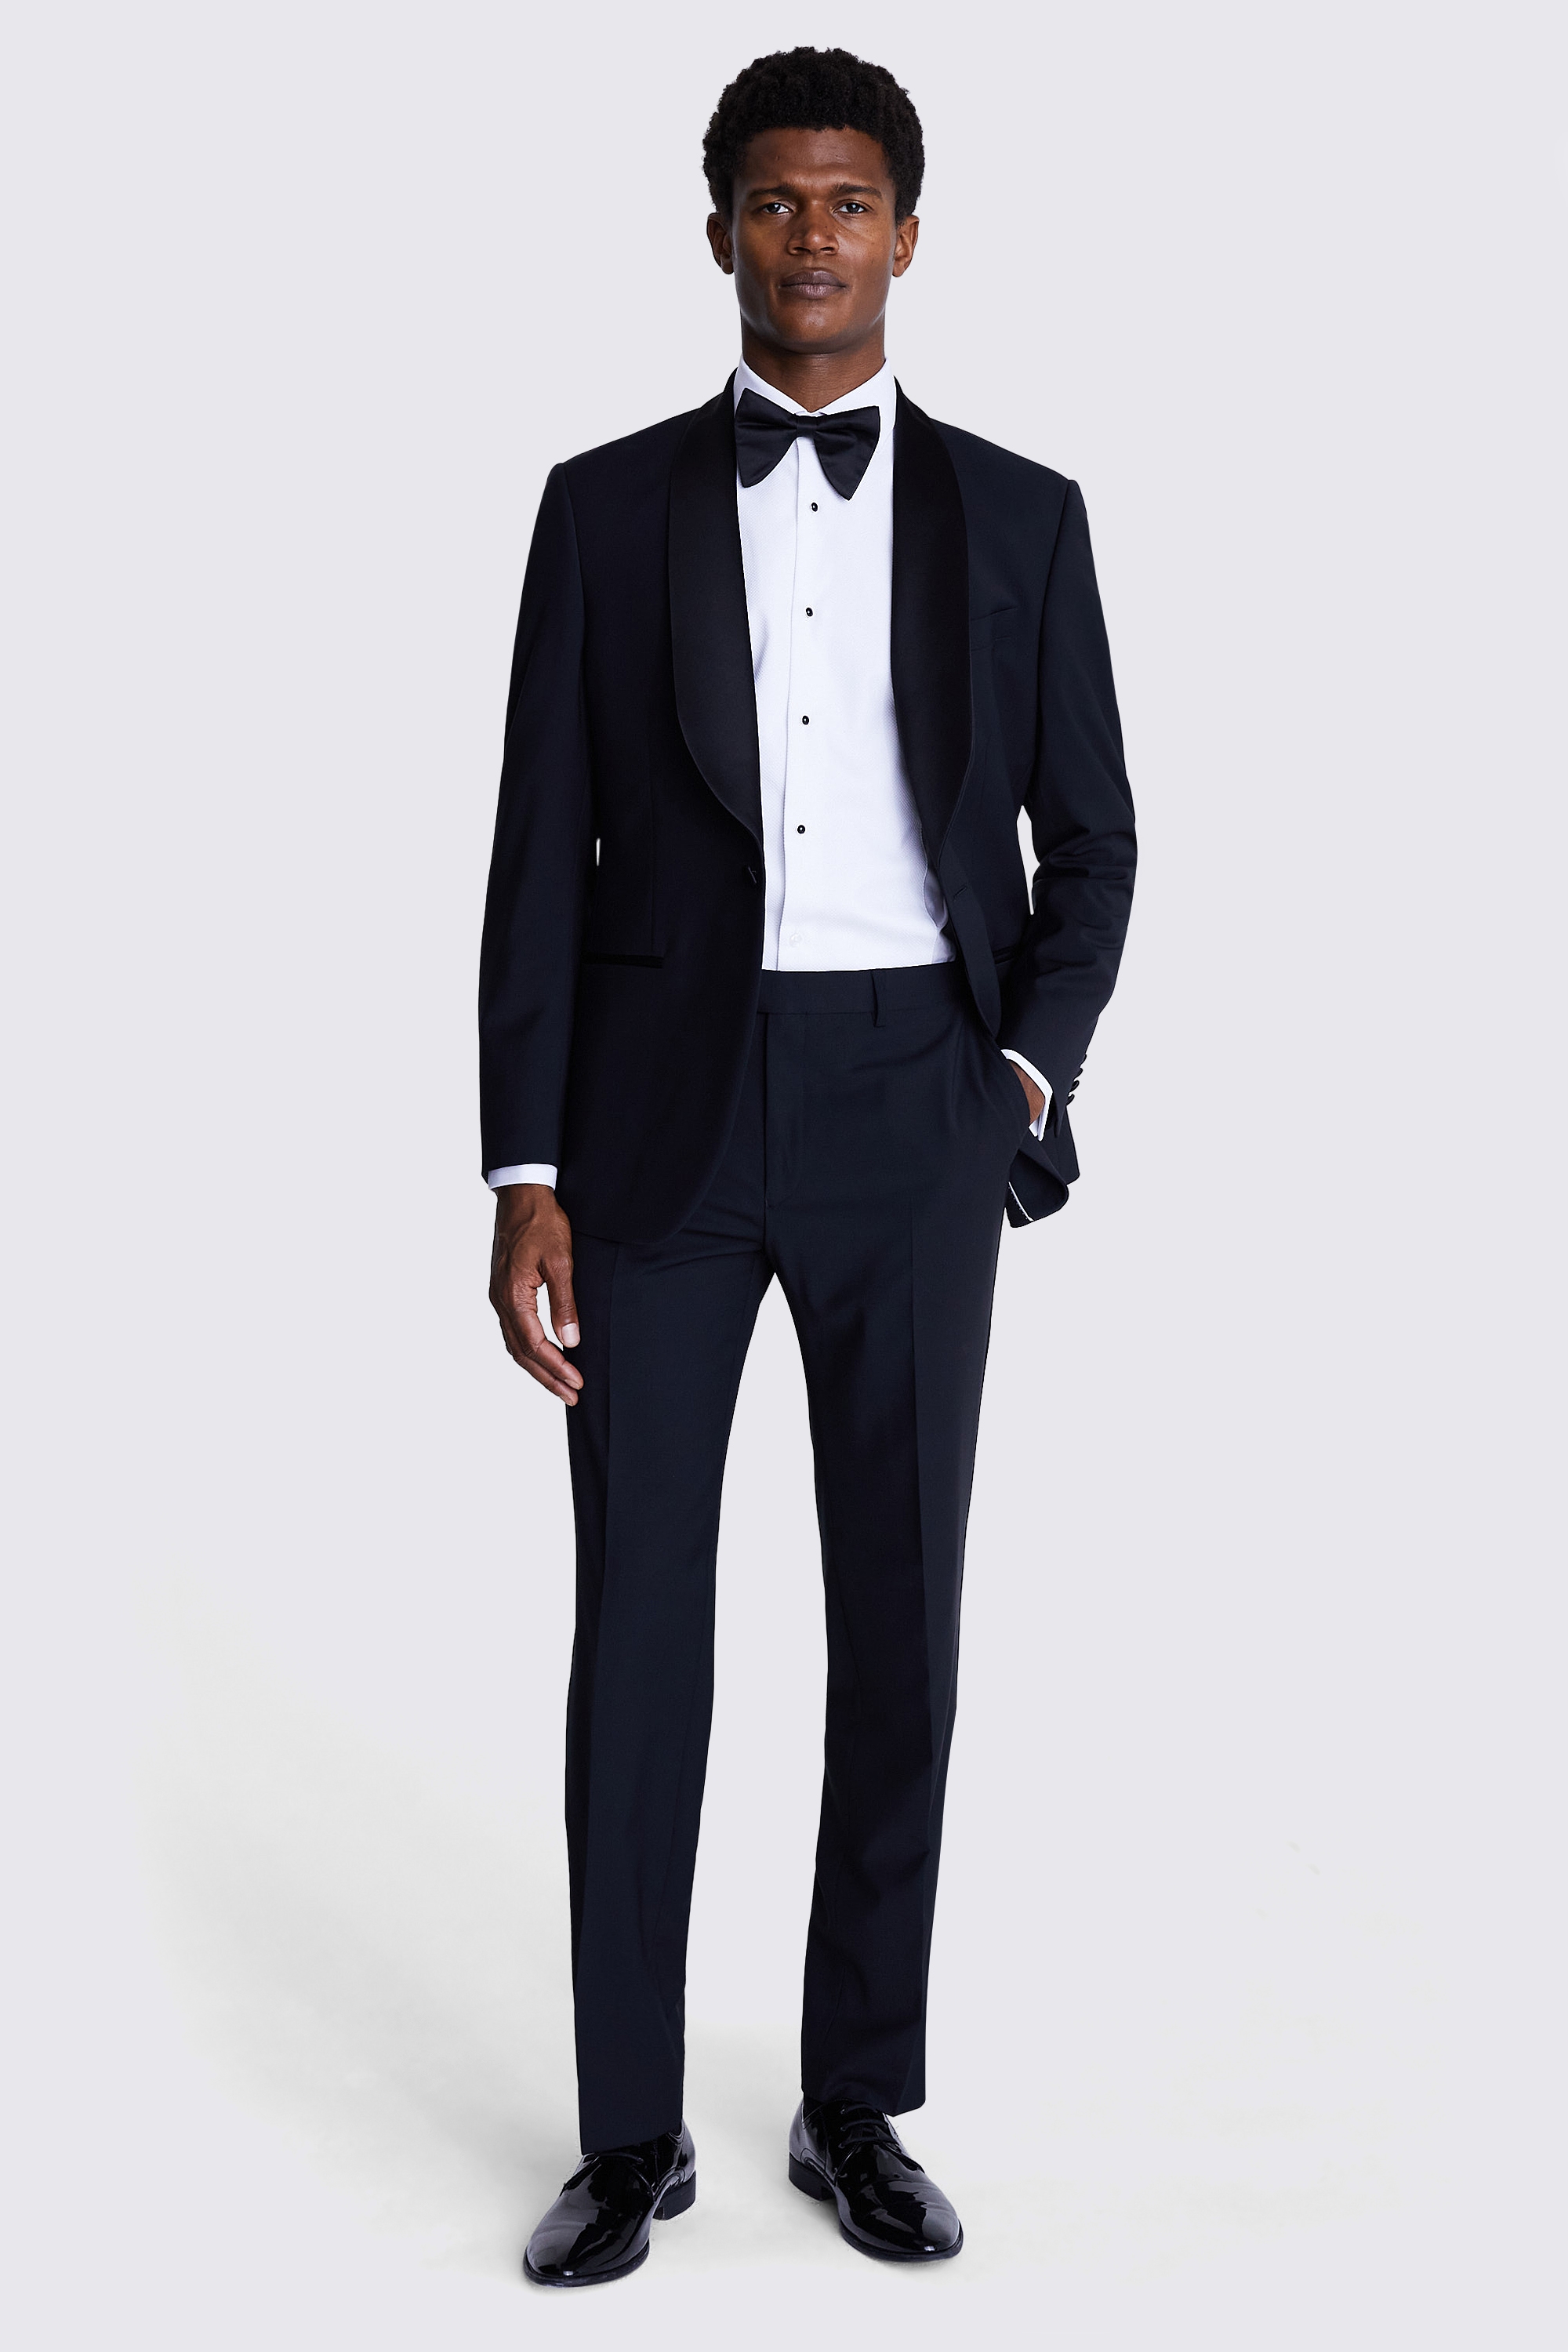 Regular Fit Black Shawl Lapel Tuxedo Jacket | Buy Online at Moss